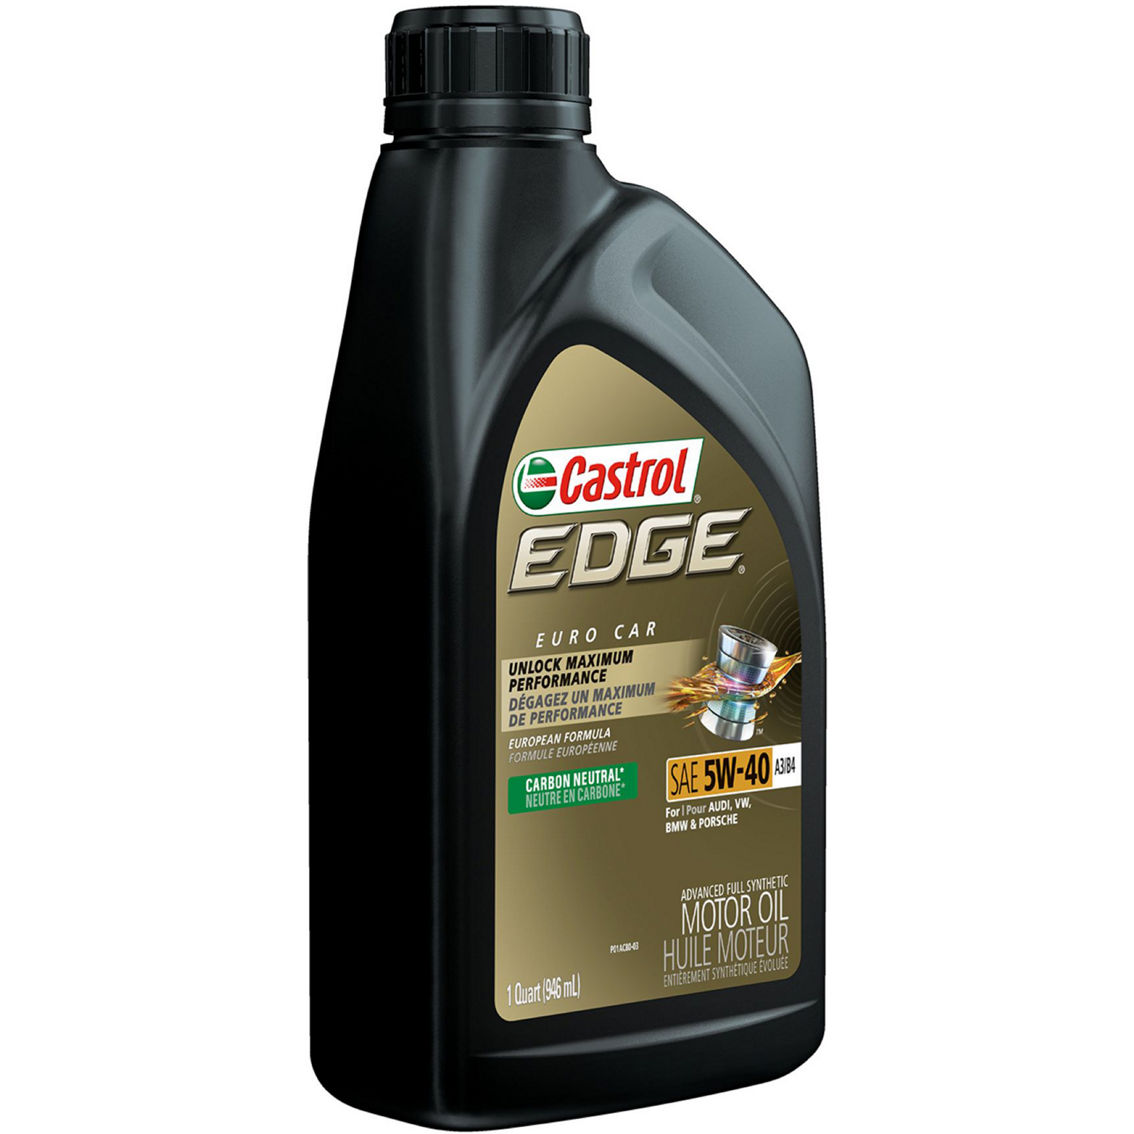 Castrol Edge 5W-40 A3/B4, 6X1USqt UC Motor Oil - Image 3 of 4